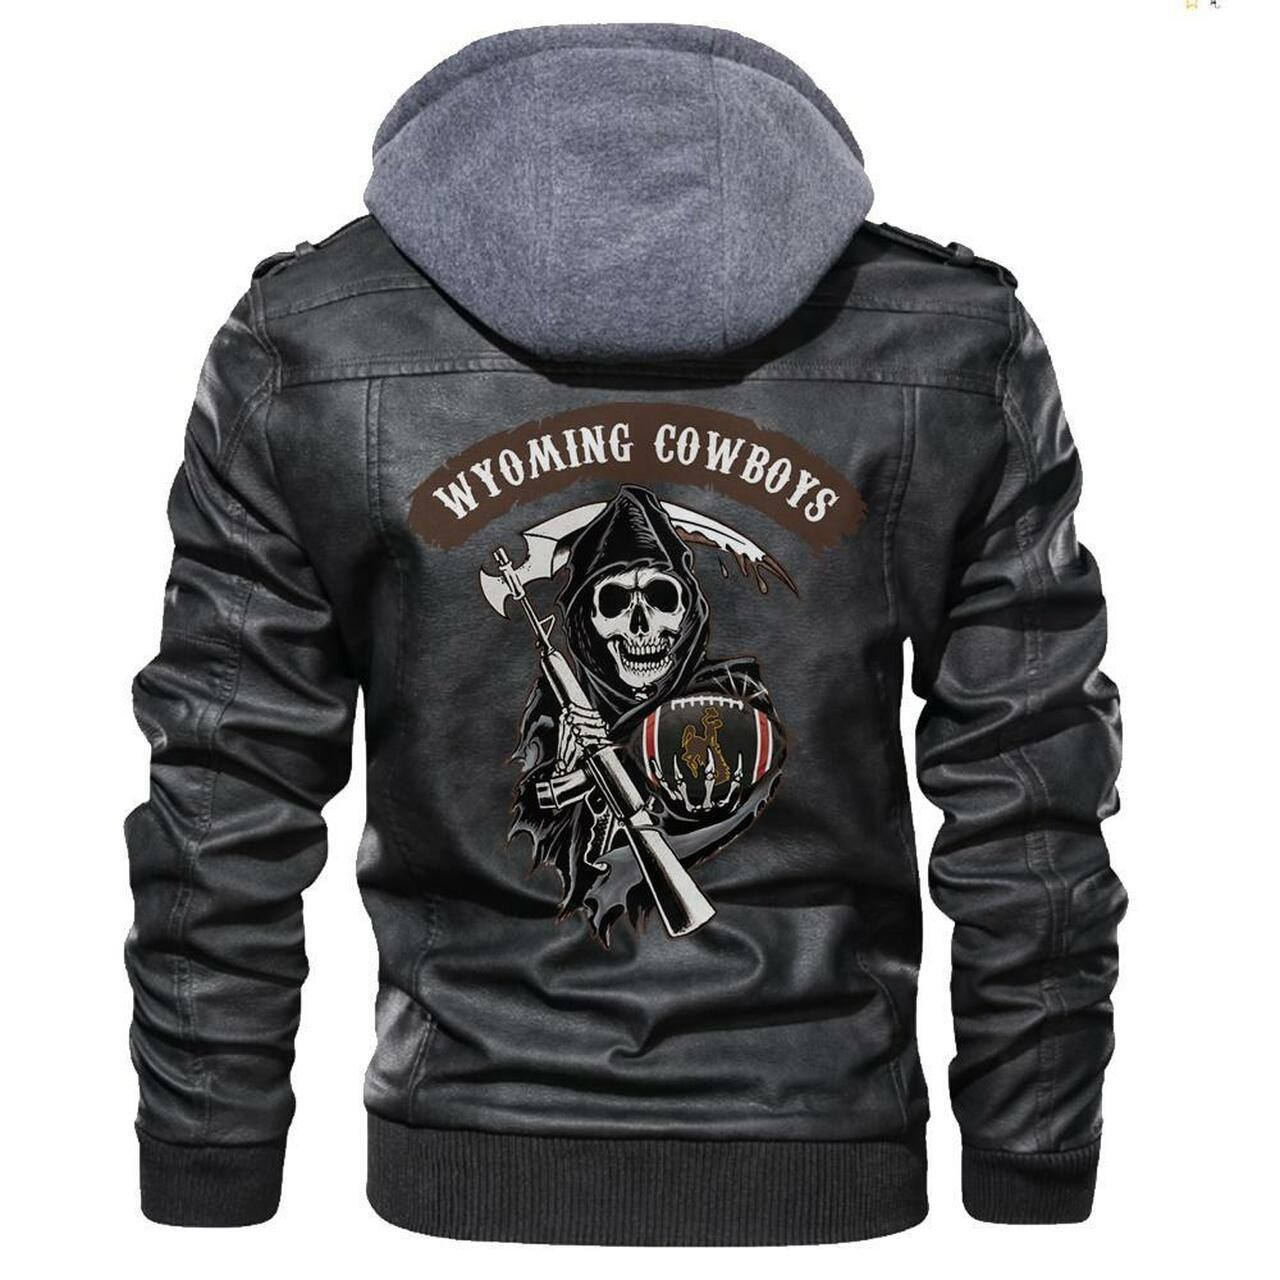 Top leather jacket Sells Best on Techcomshop 69